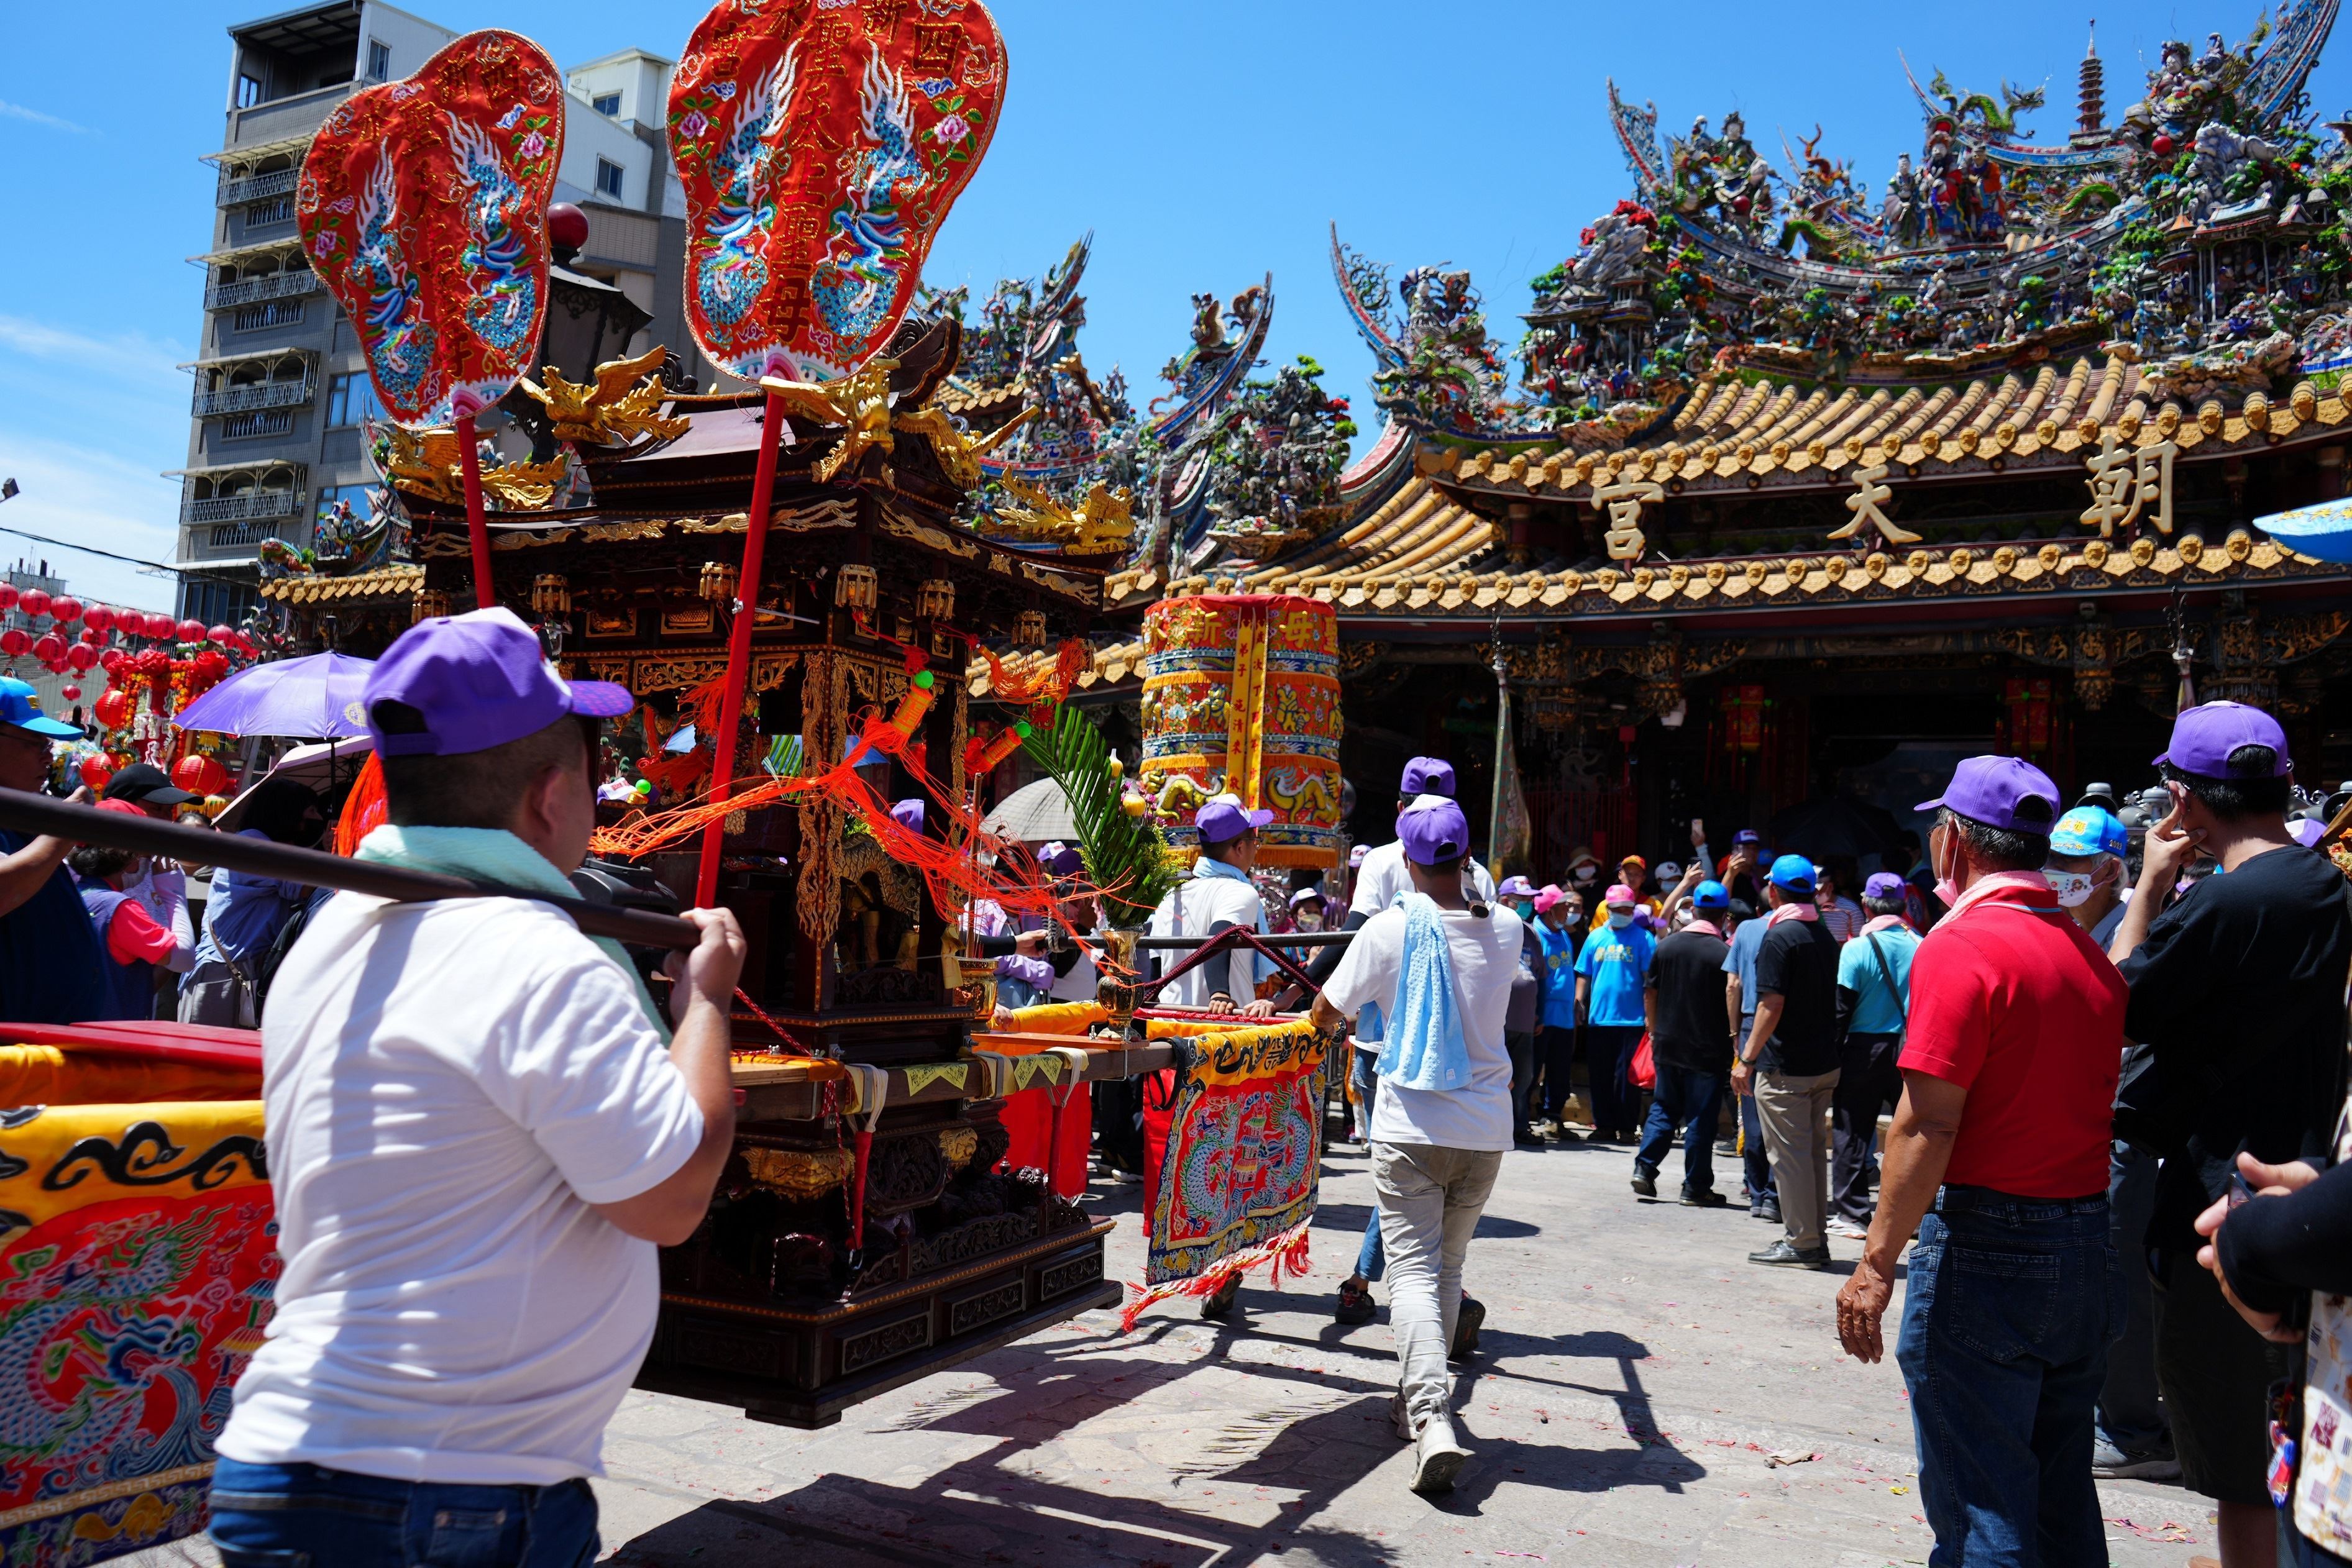 Ministerio de Cultura aprueba procesión al templo Beigang Chao-Tian como importante costumbre popular